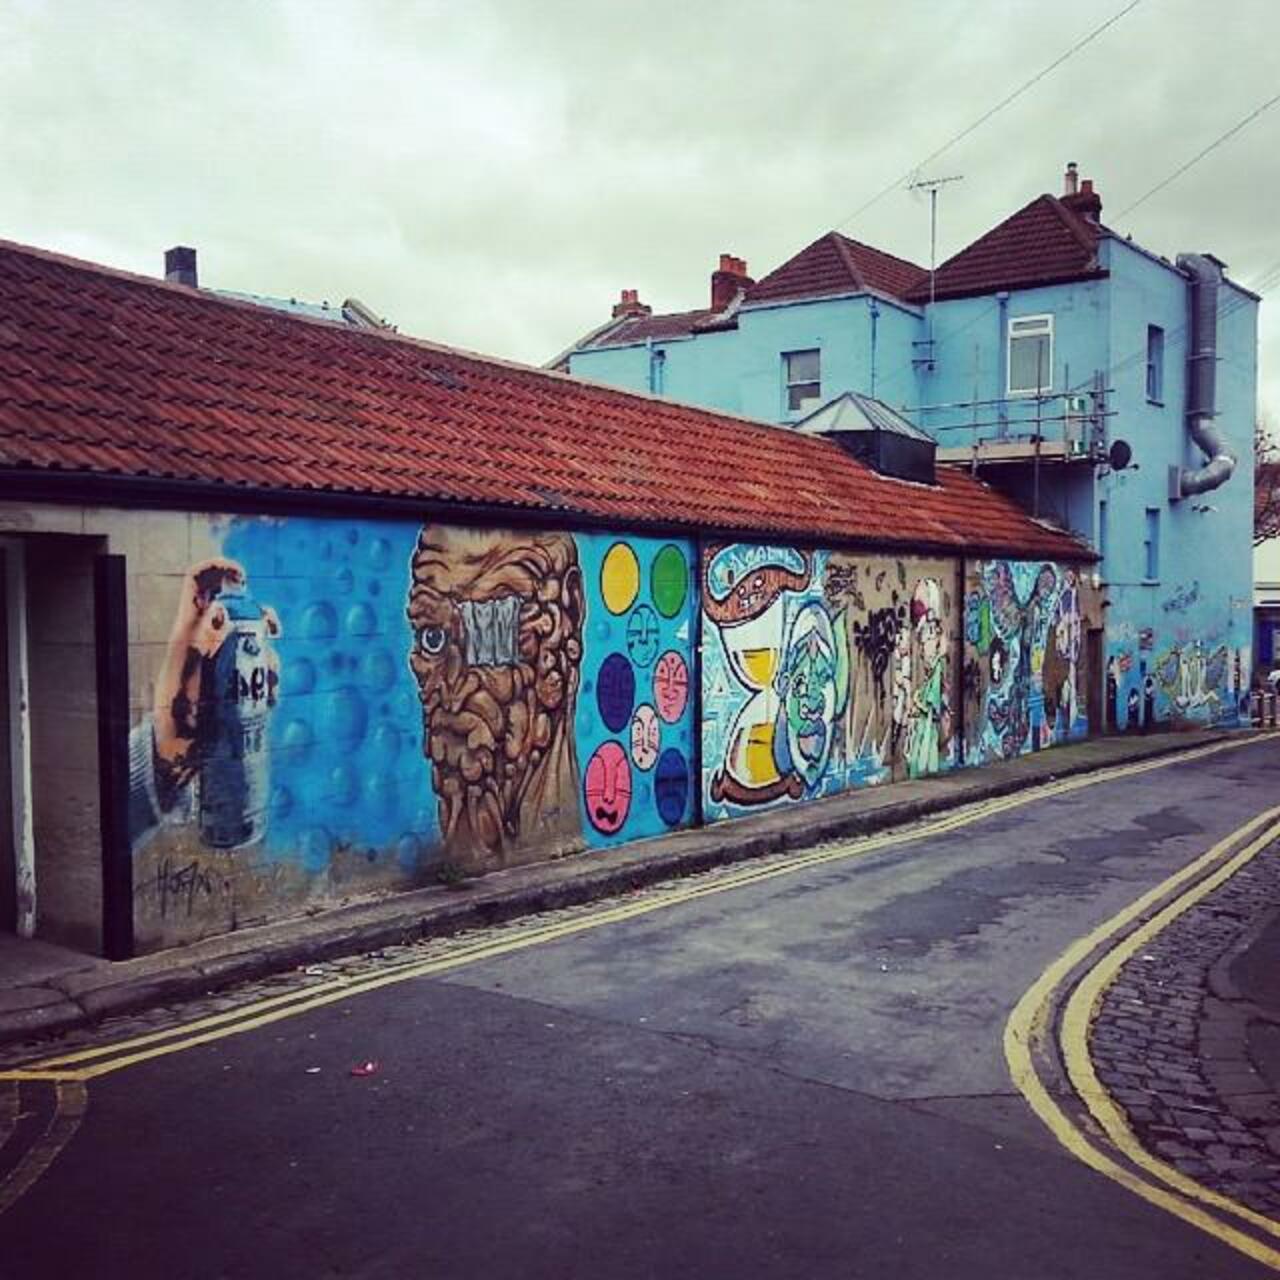 #muralwall #mural #Bristol #art off #GloucesterRoad #ukgraffiti #uk #graffiti #streetart #streetartbristol #Bristol… http://t.co/RG0dUgNh2t